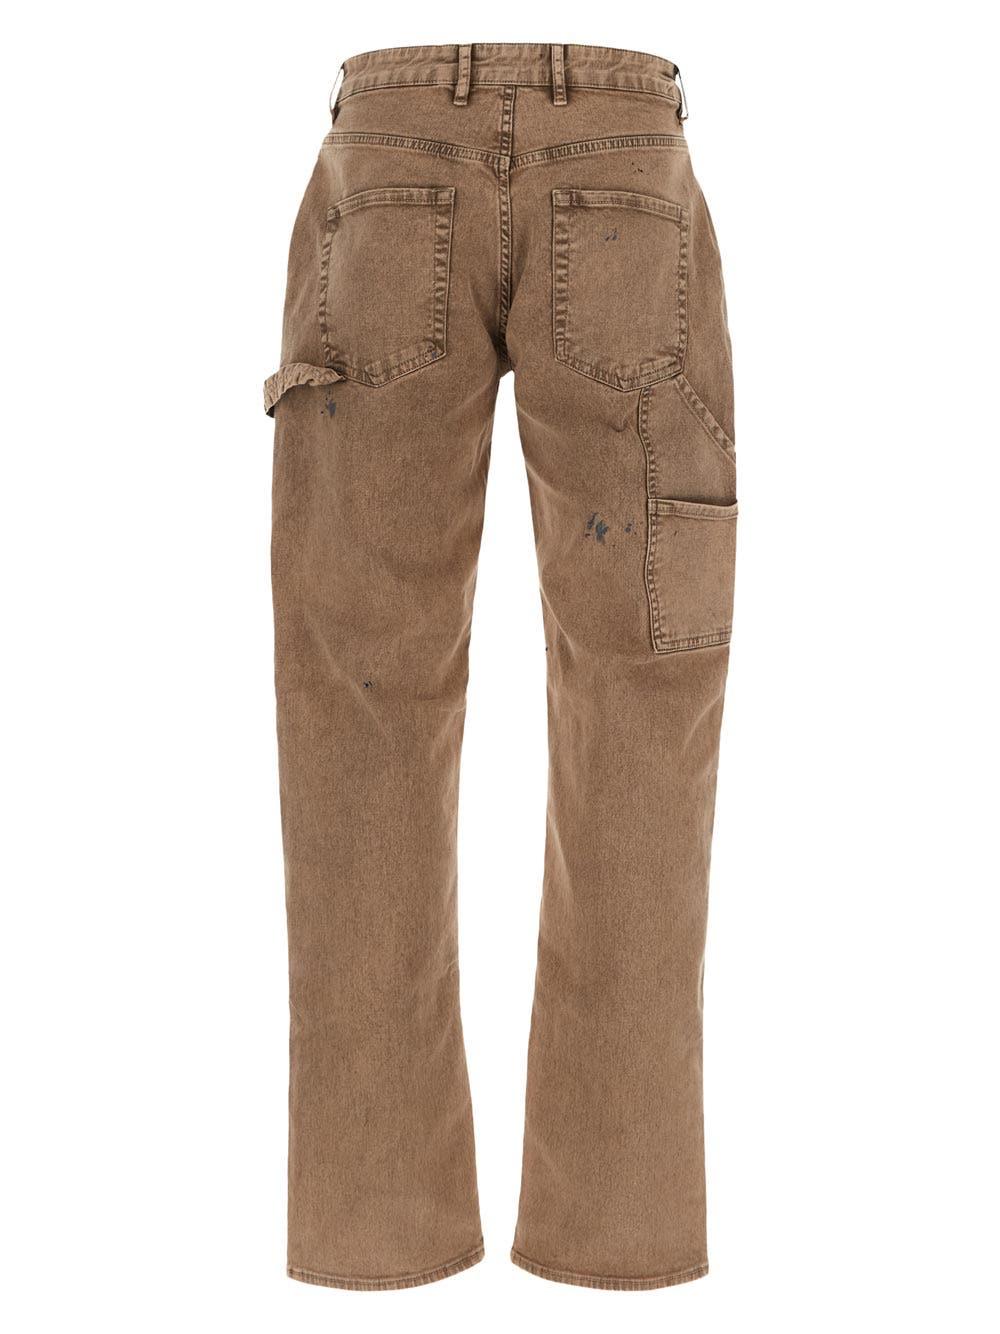 Ben Davis Work Pants Men Original Fit Cotton Blend India | Ubuy